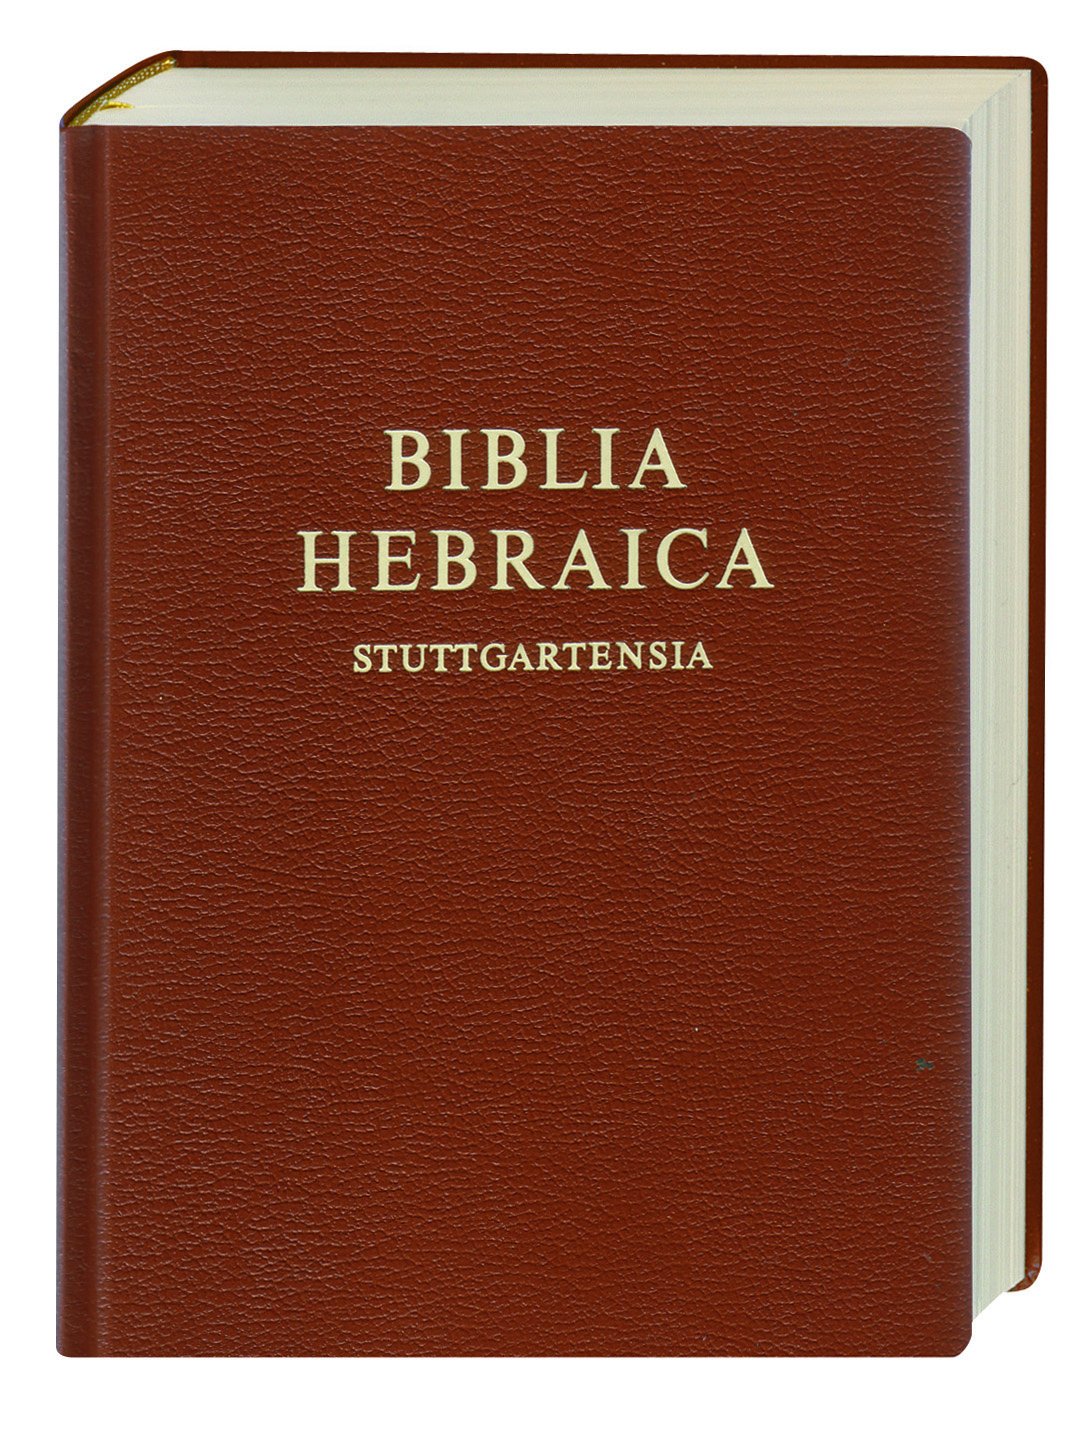 Biblia Hebraica Stuttgartensia - Cover